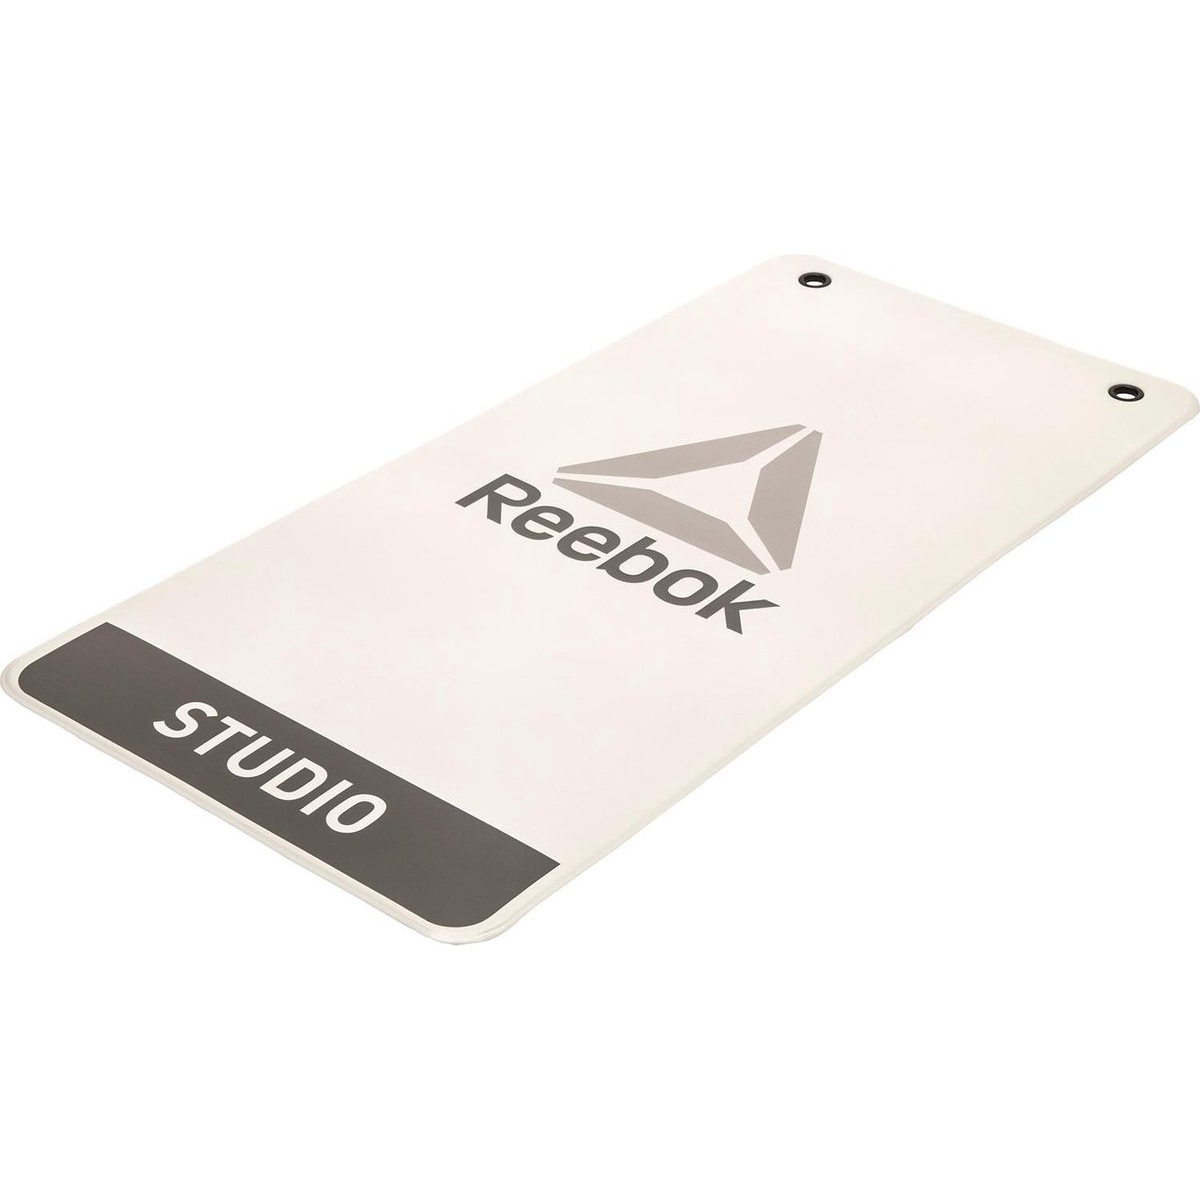 Reebok Studio mat - Fitness mat - 100 x 50 x 1 cm